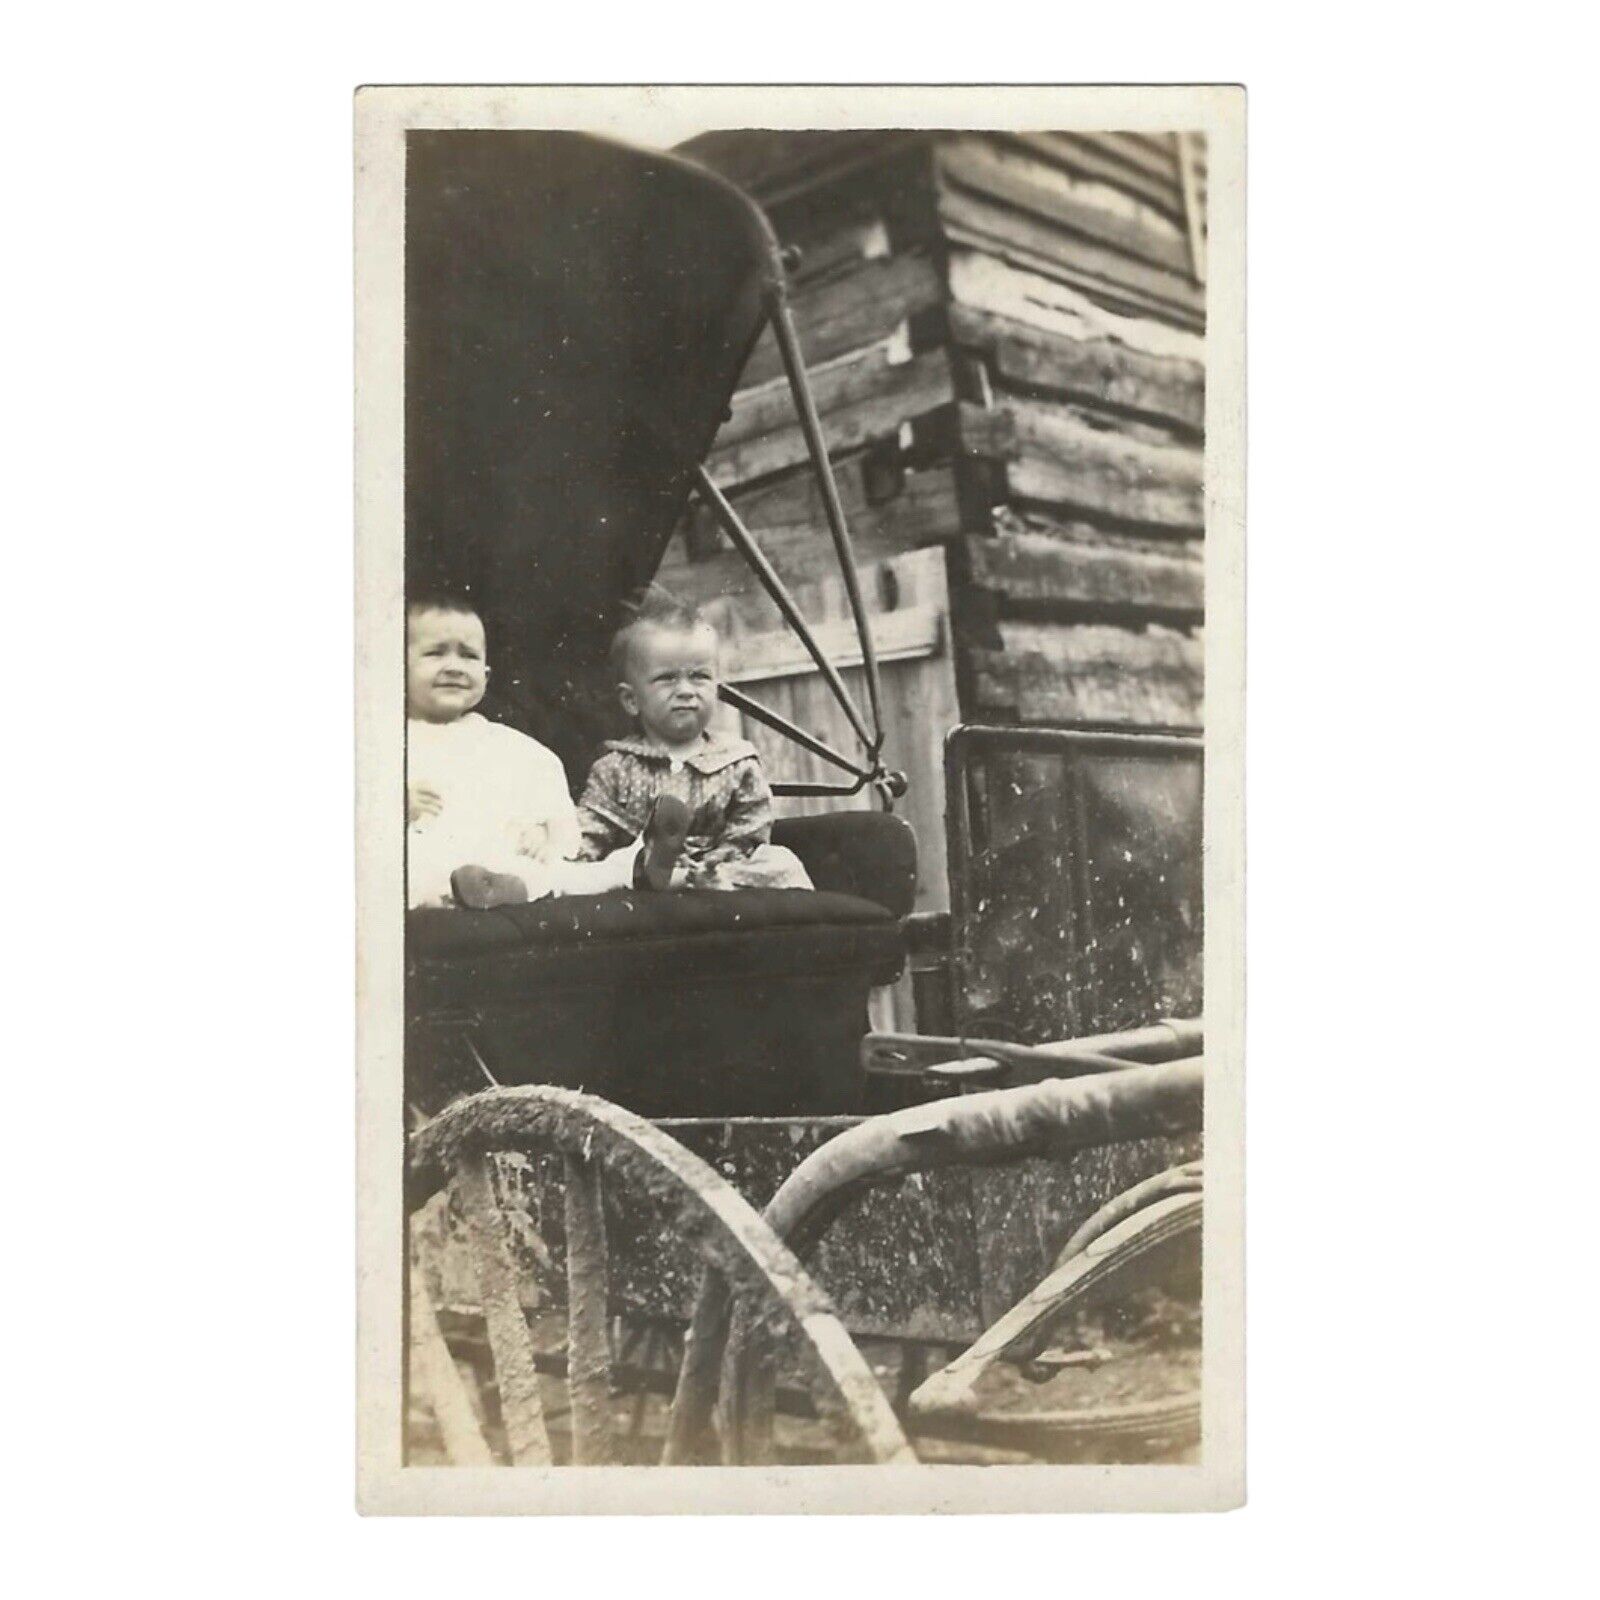 Vintage Snapshot Identified Photo Wooden Wagon Wheels Carriage Rural Farm Life